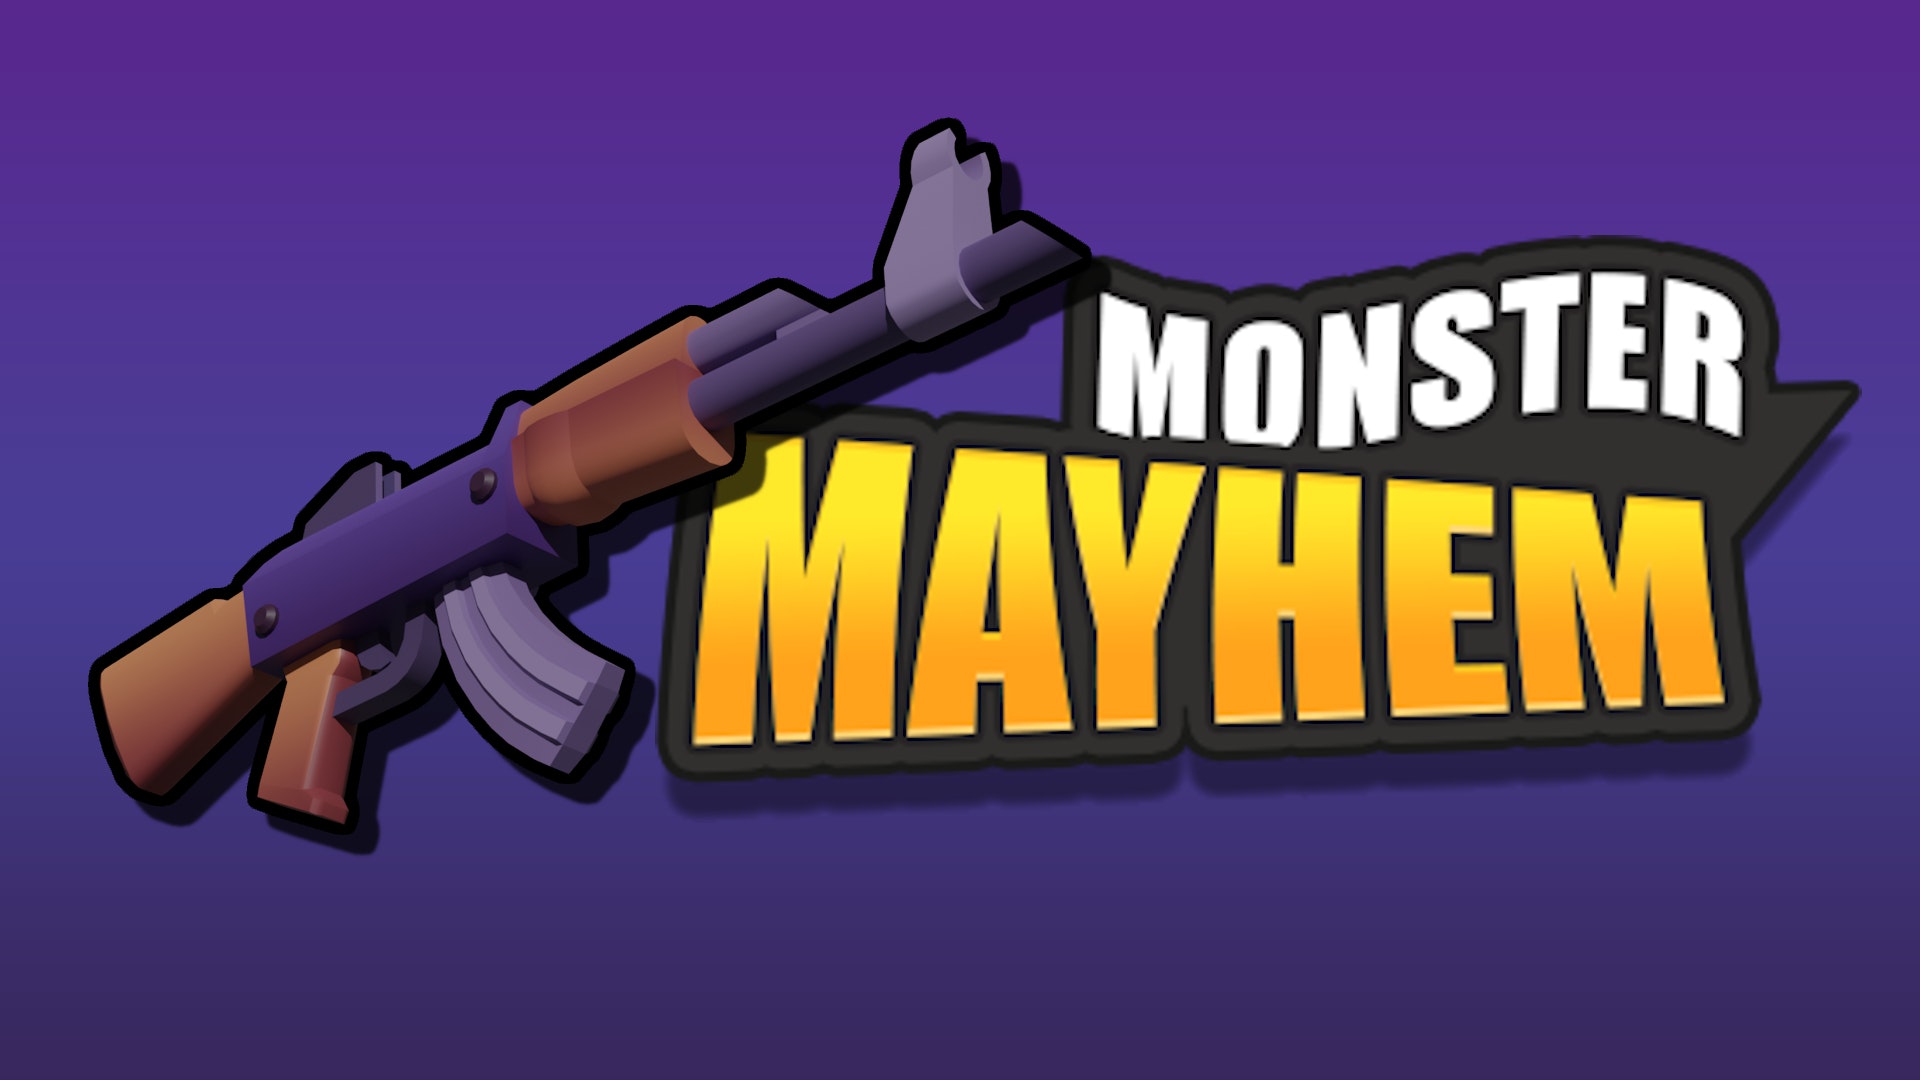 Gun Mayhem 🕹️ Play on CrazyGames